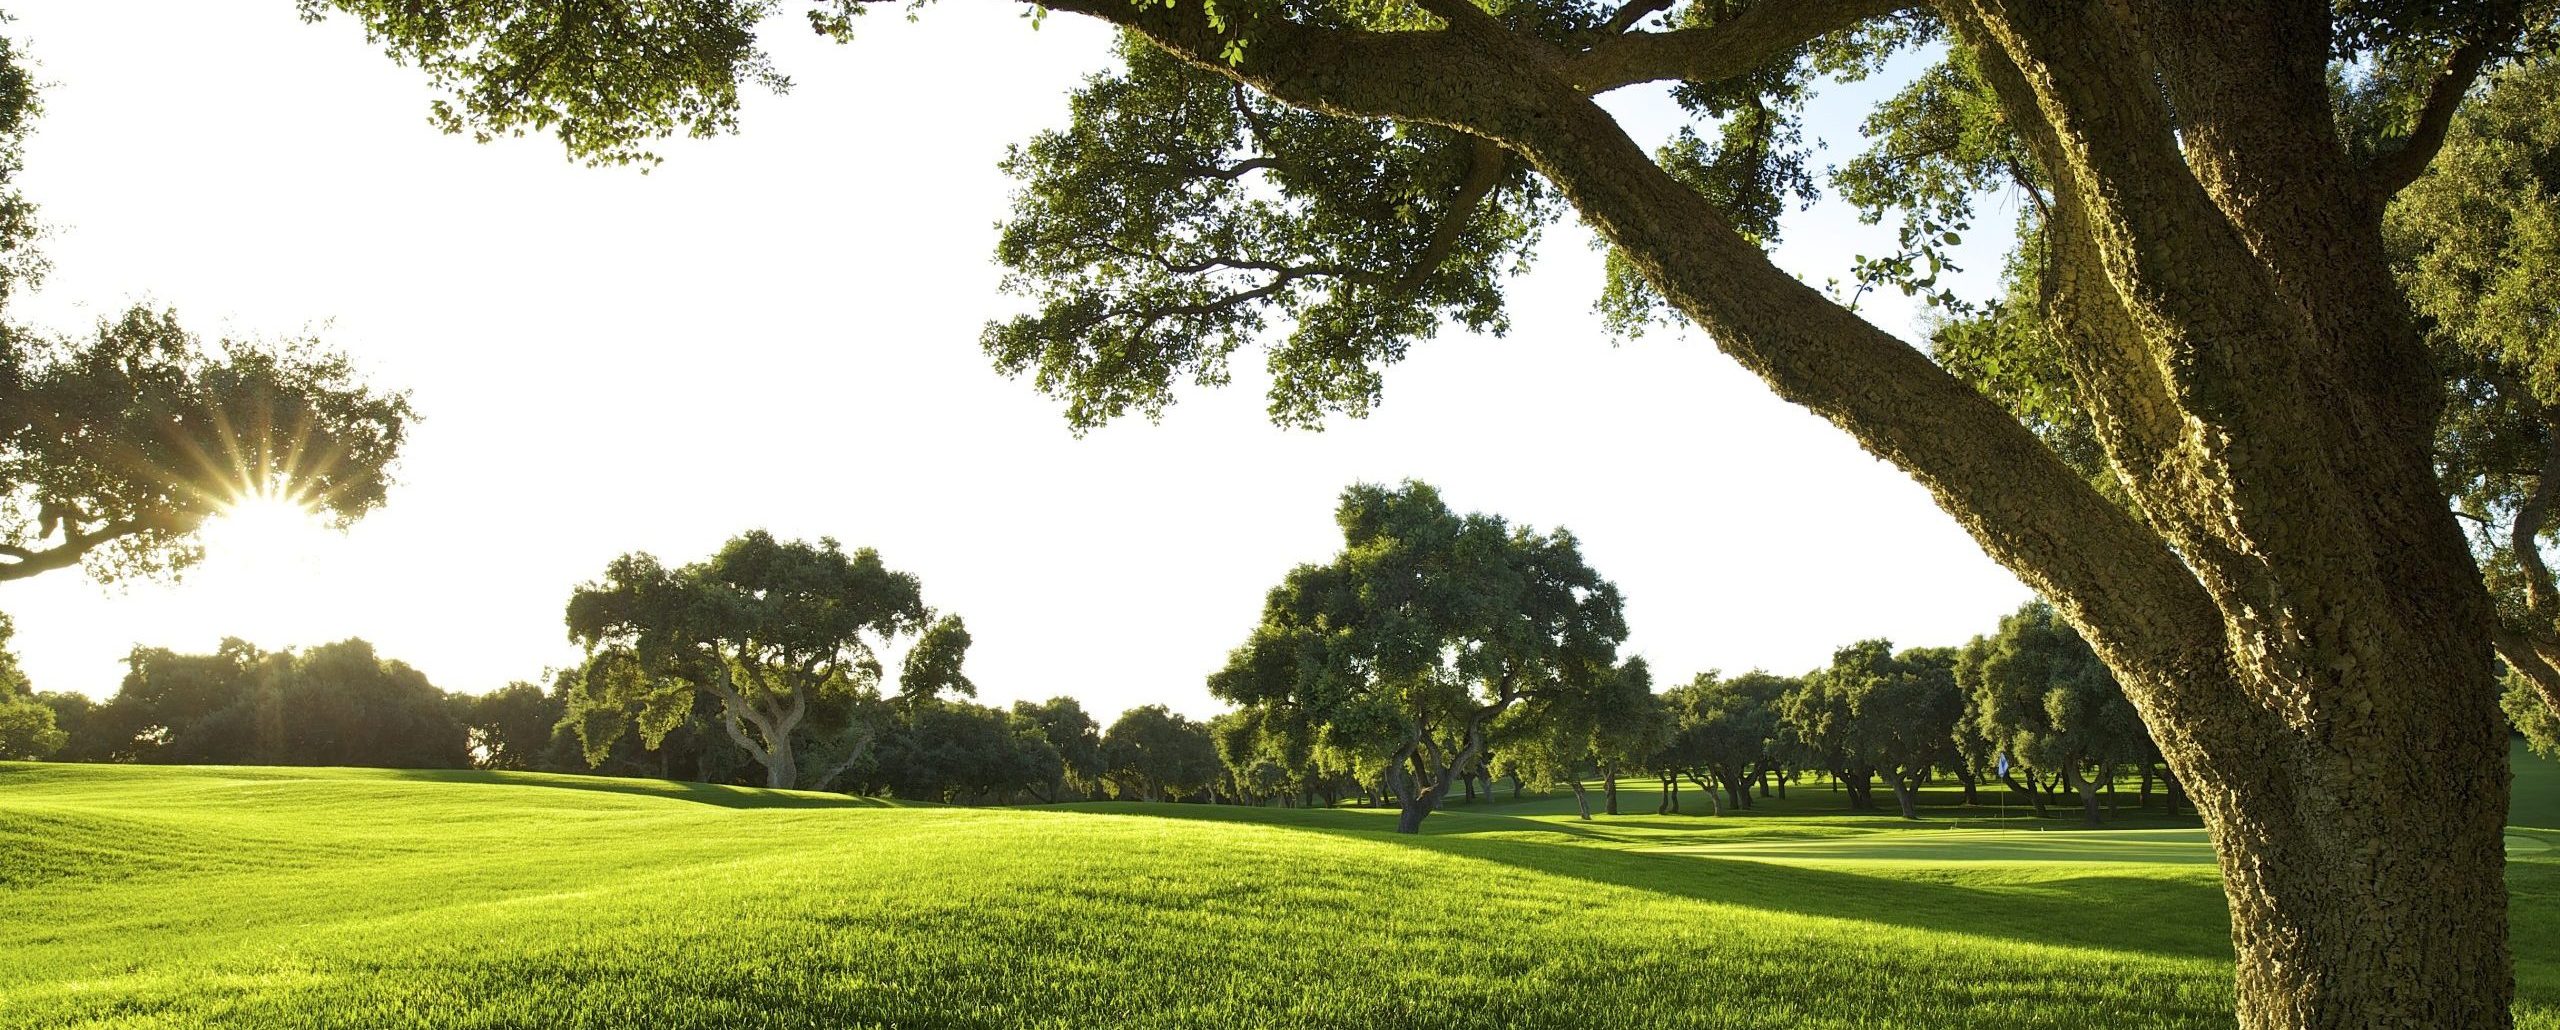 Trees at Valderrama Golf Course, Spain